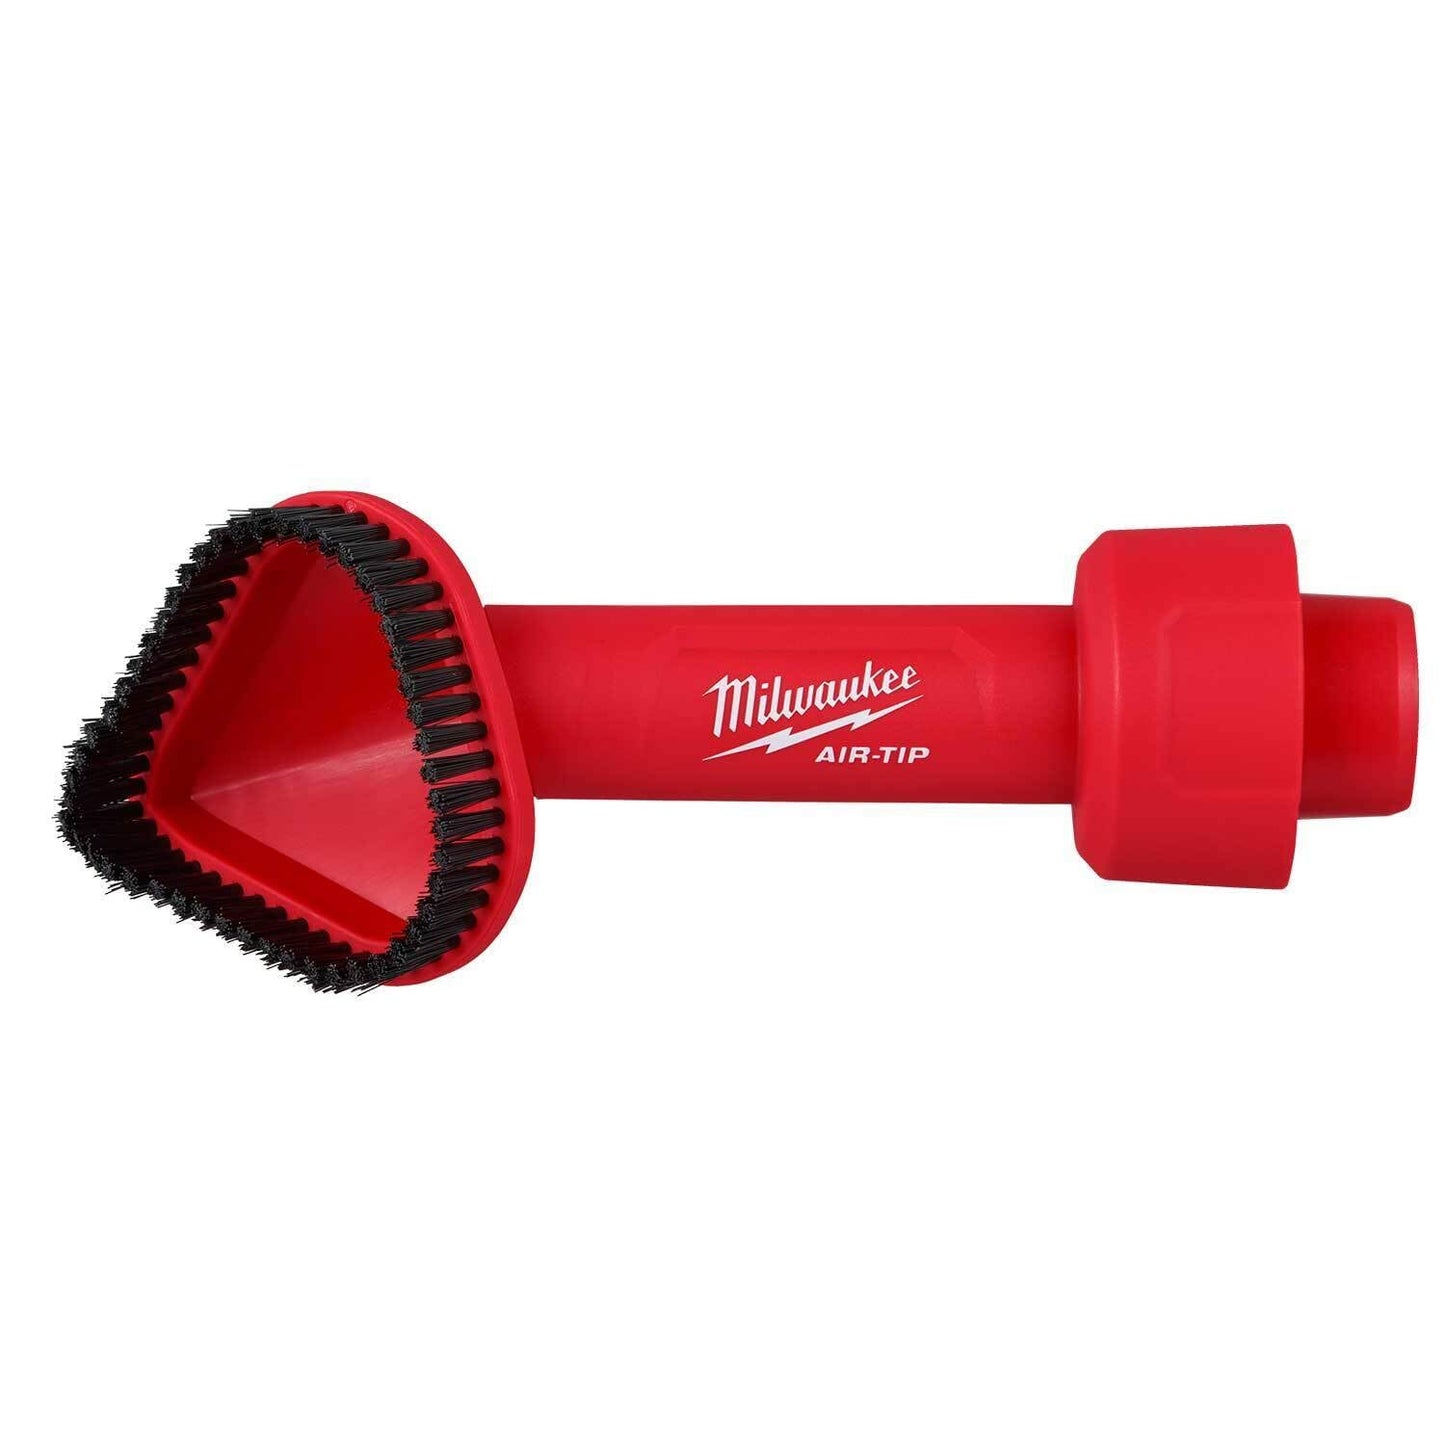 Milwaukee Air-Tip Shop Vac Rotating Corner Brush Tool Wet/Dry Vac Brush Vacuum Attachment